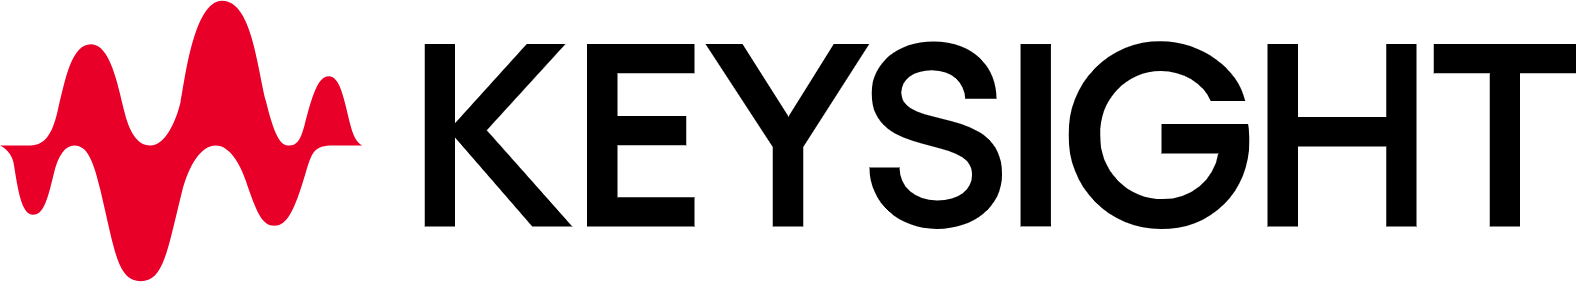 Keysight-logo.png